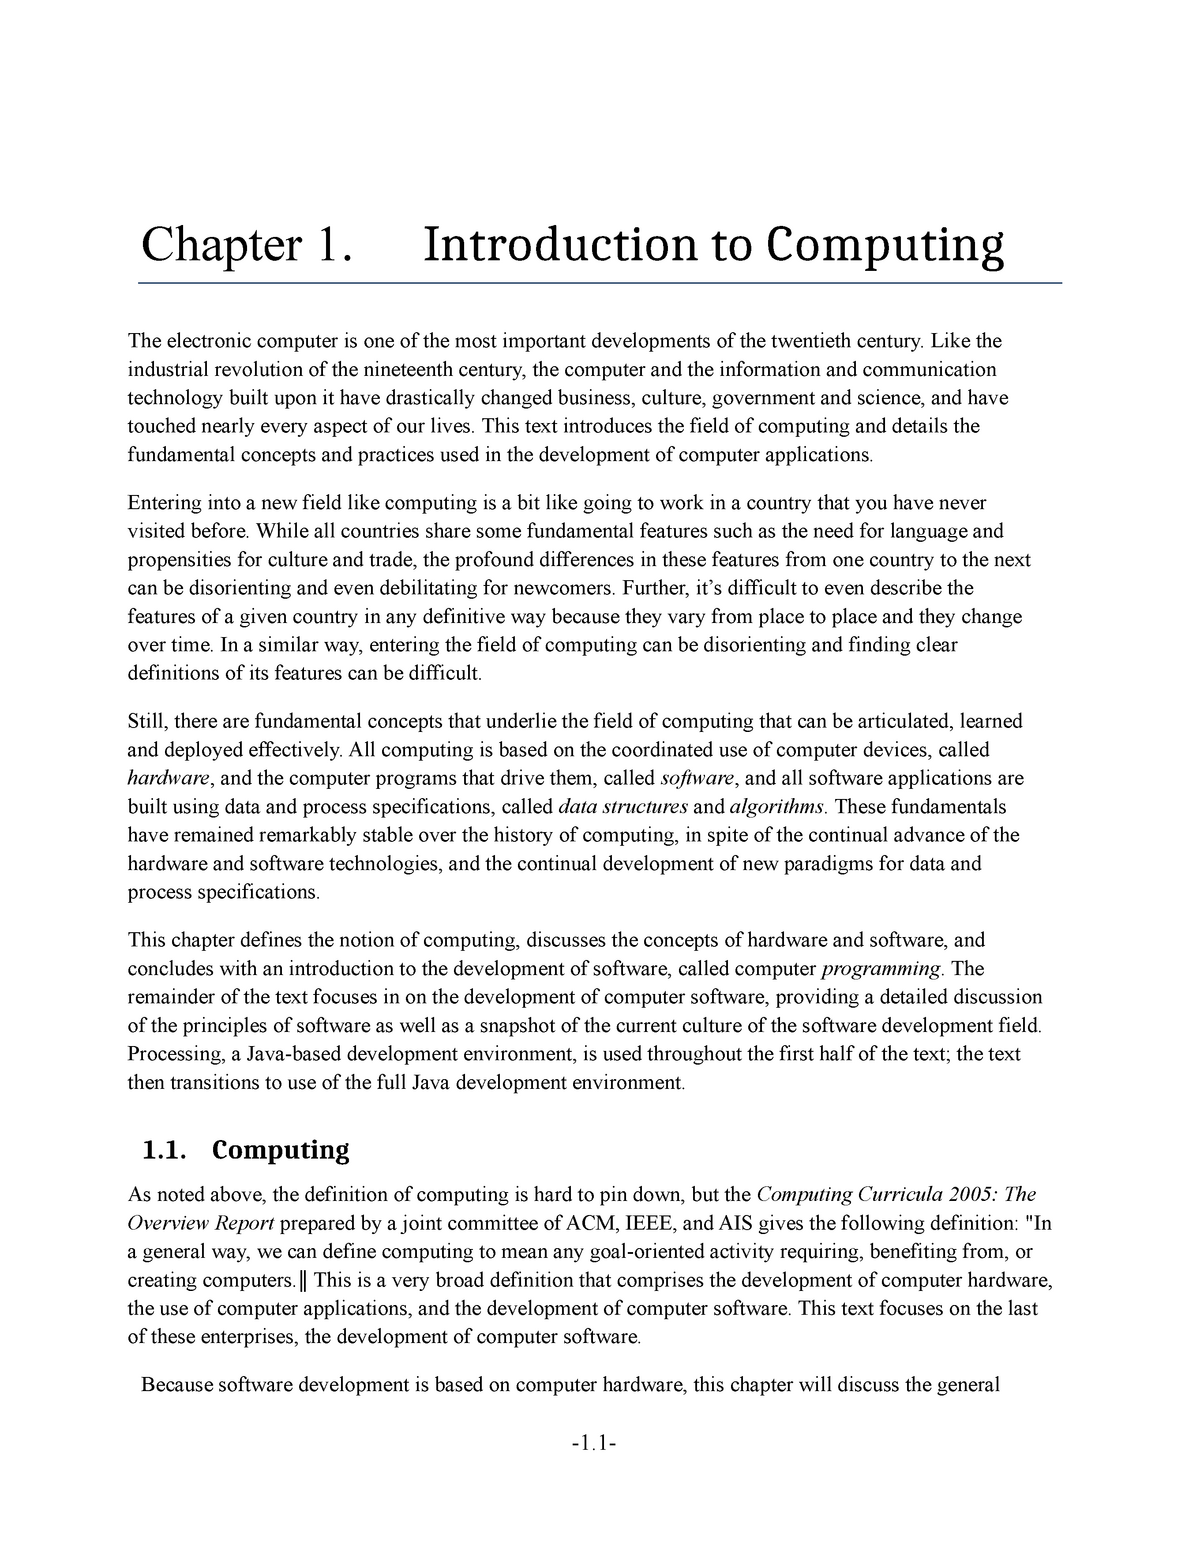 computing dissertation examples